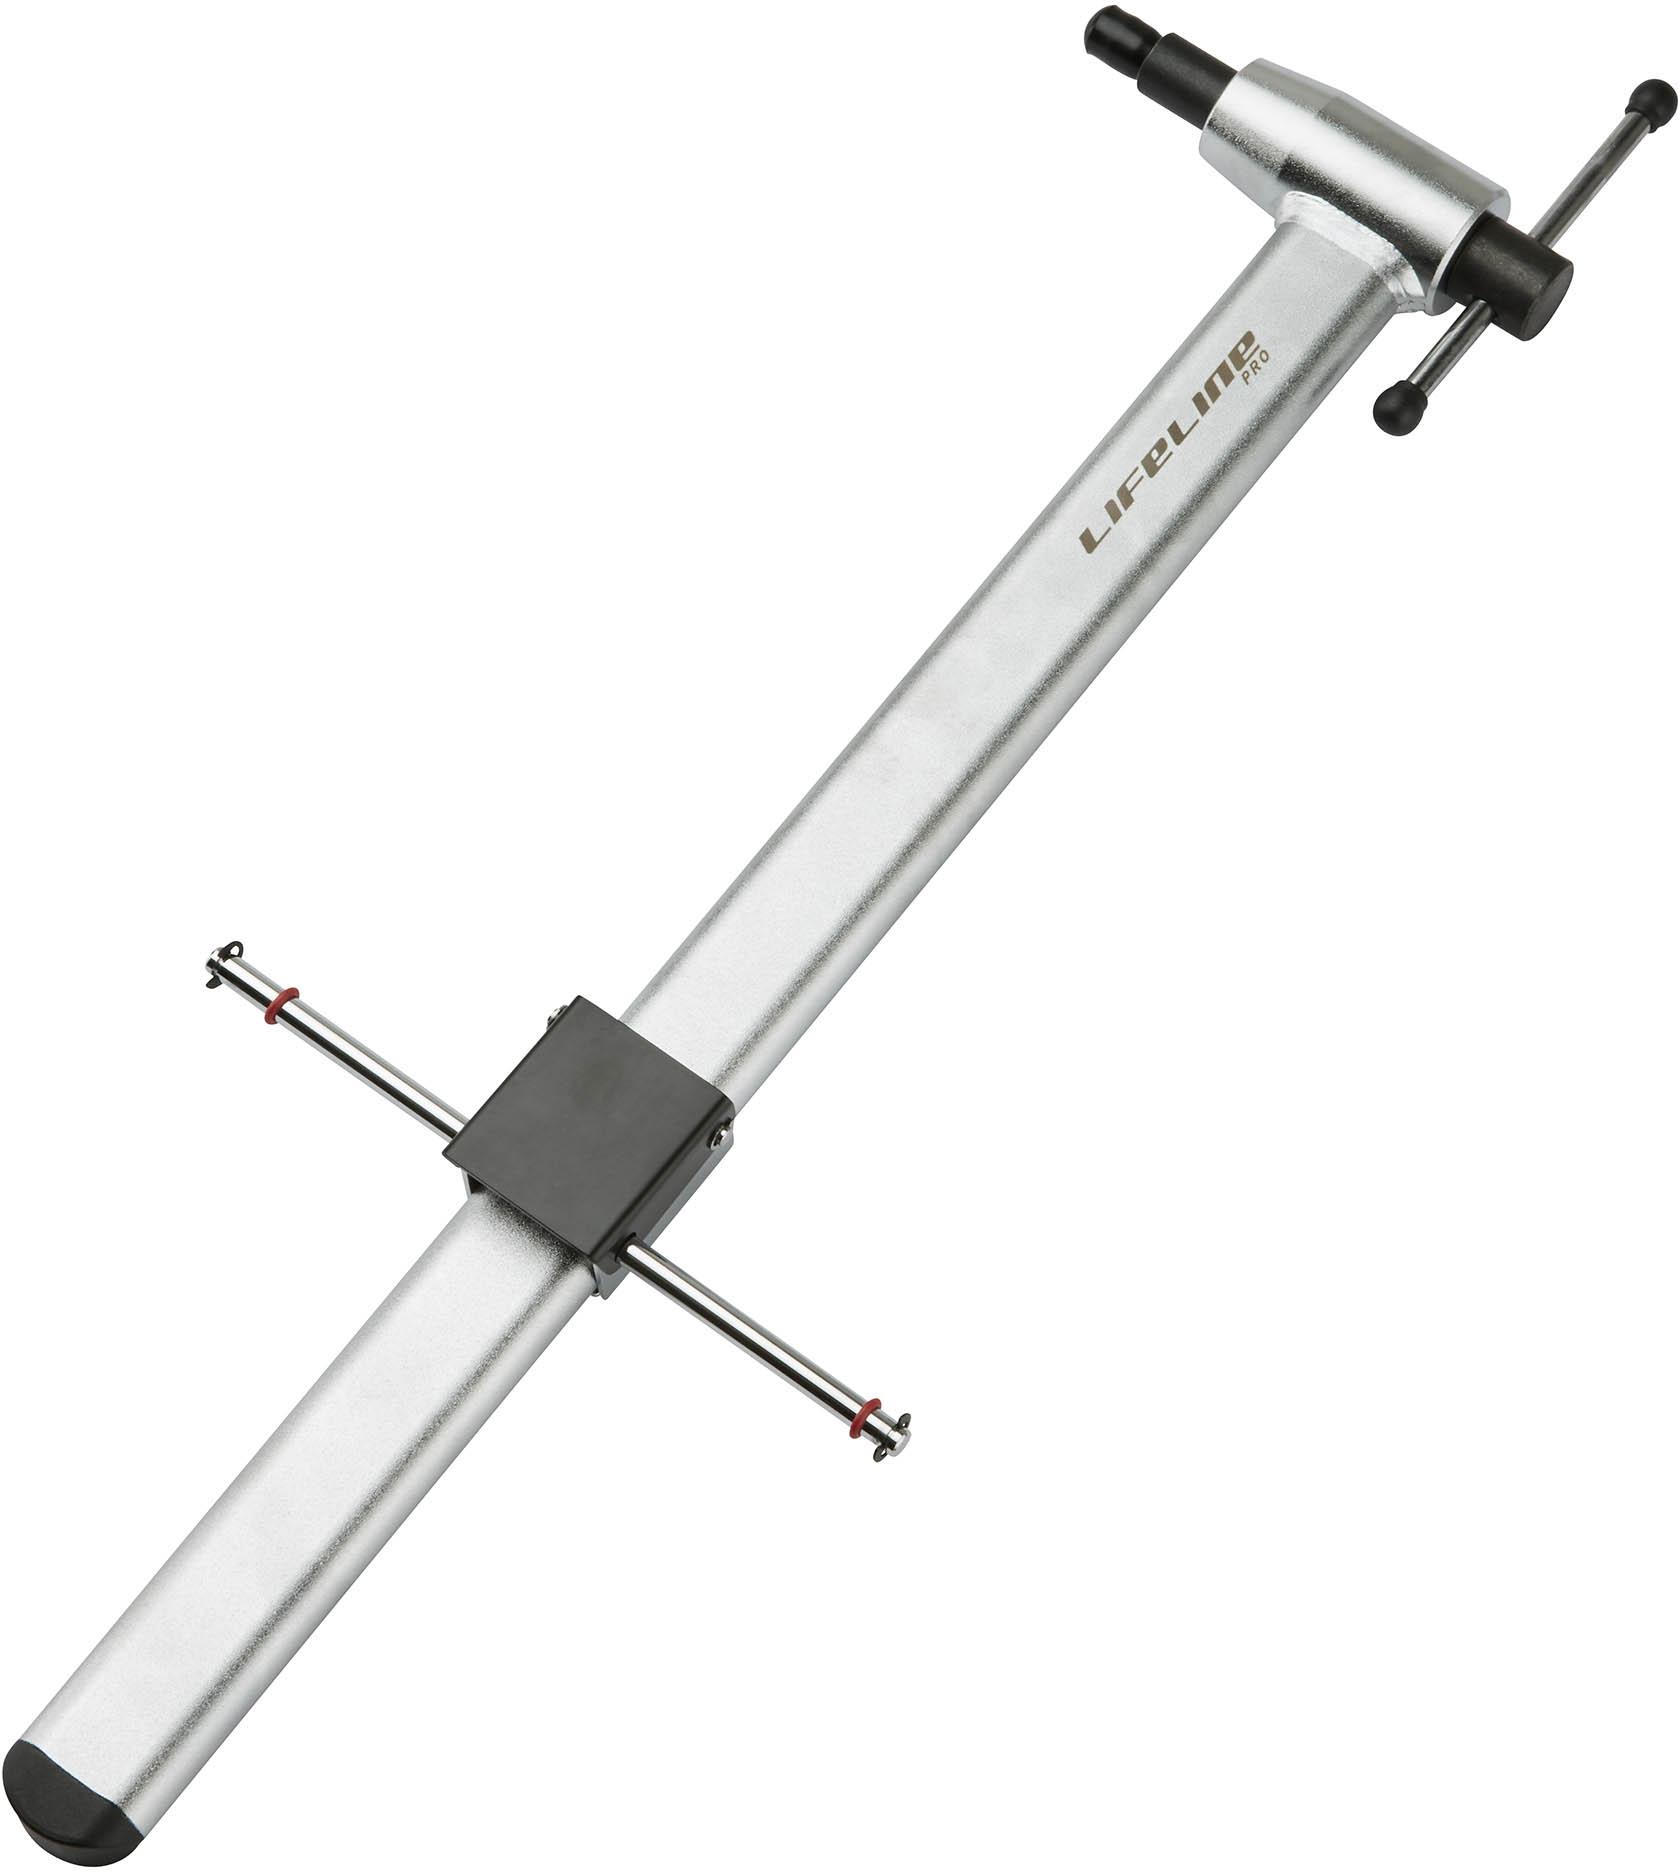 Lifeline Pro Gear Hanger Alignment Tool - Silver